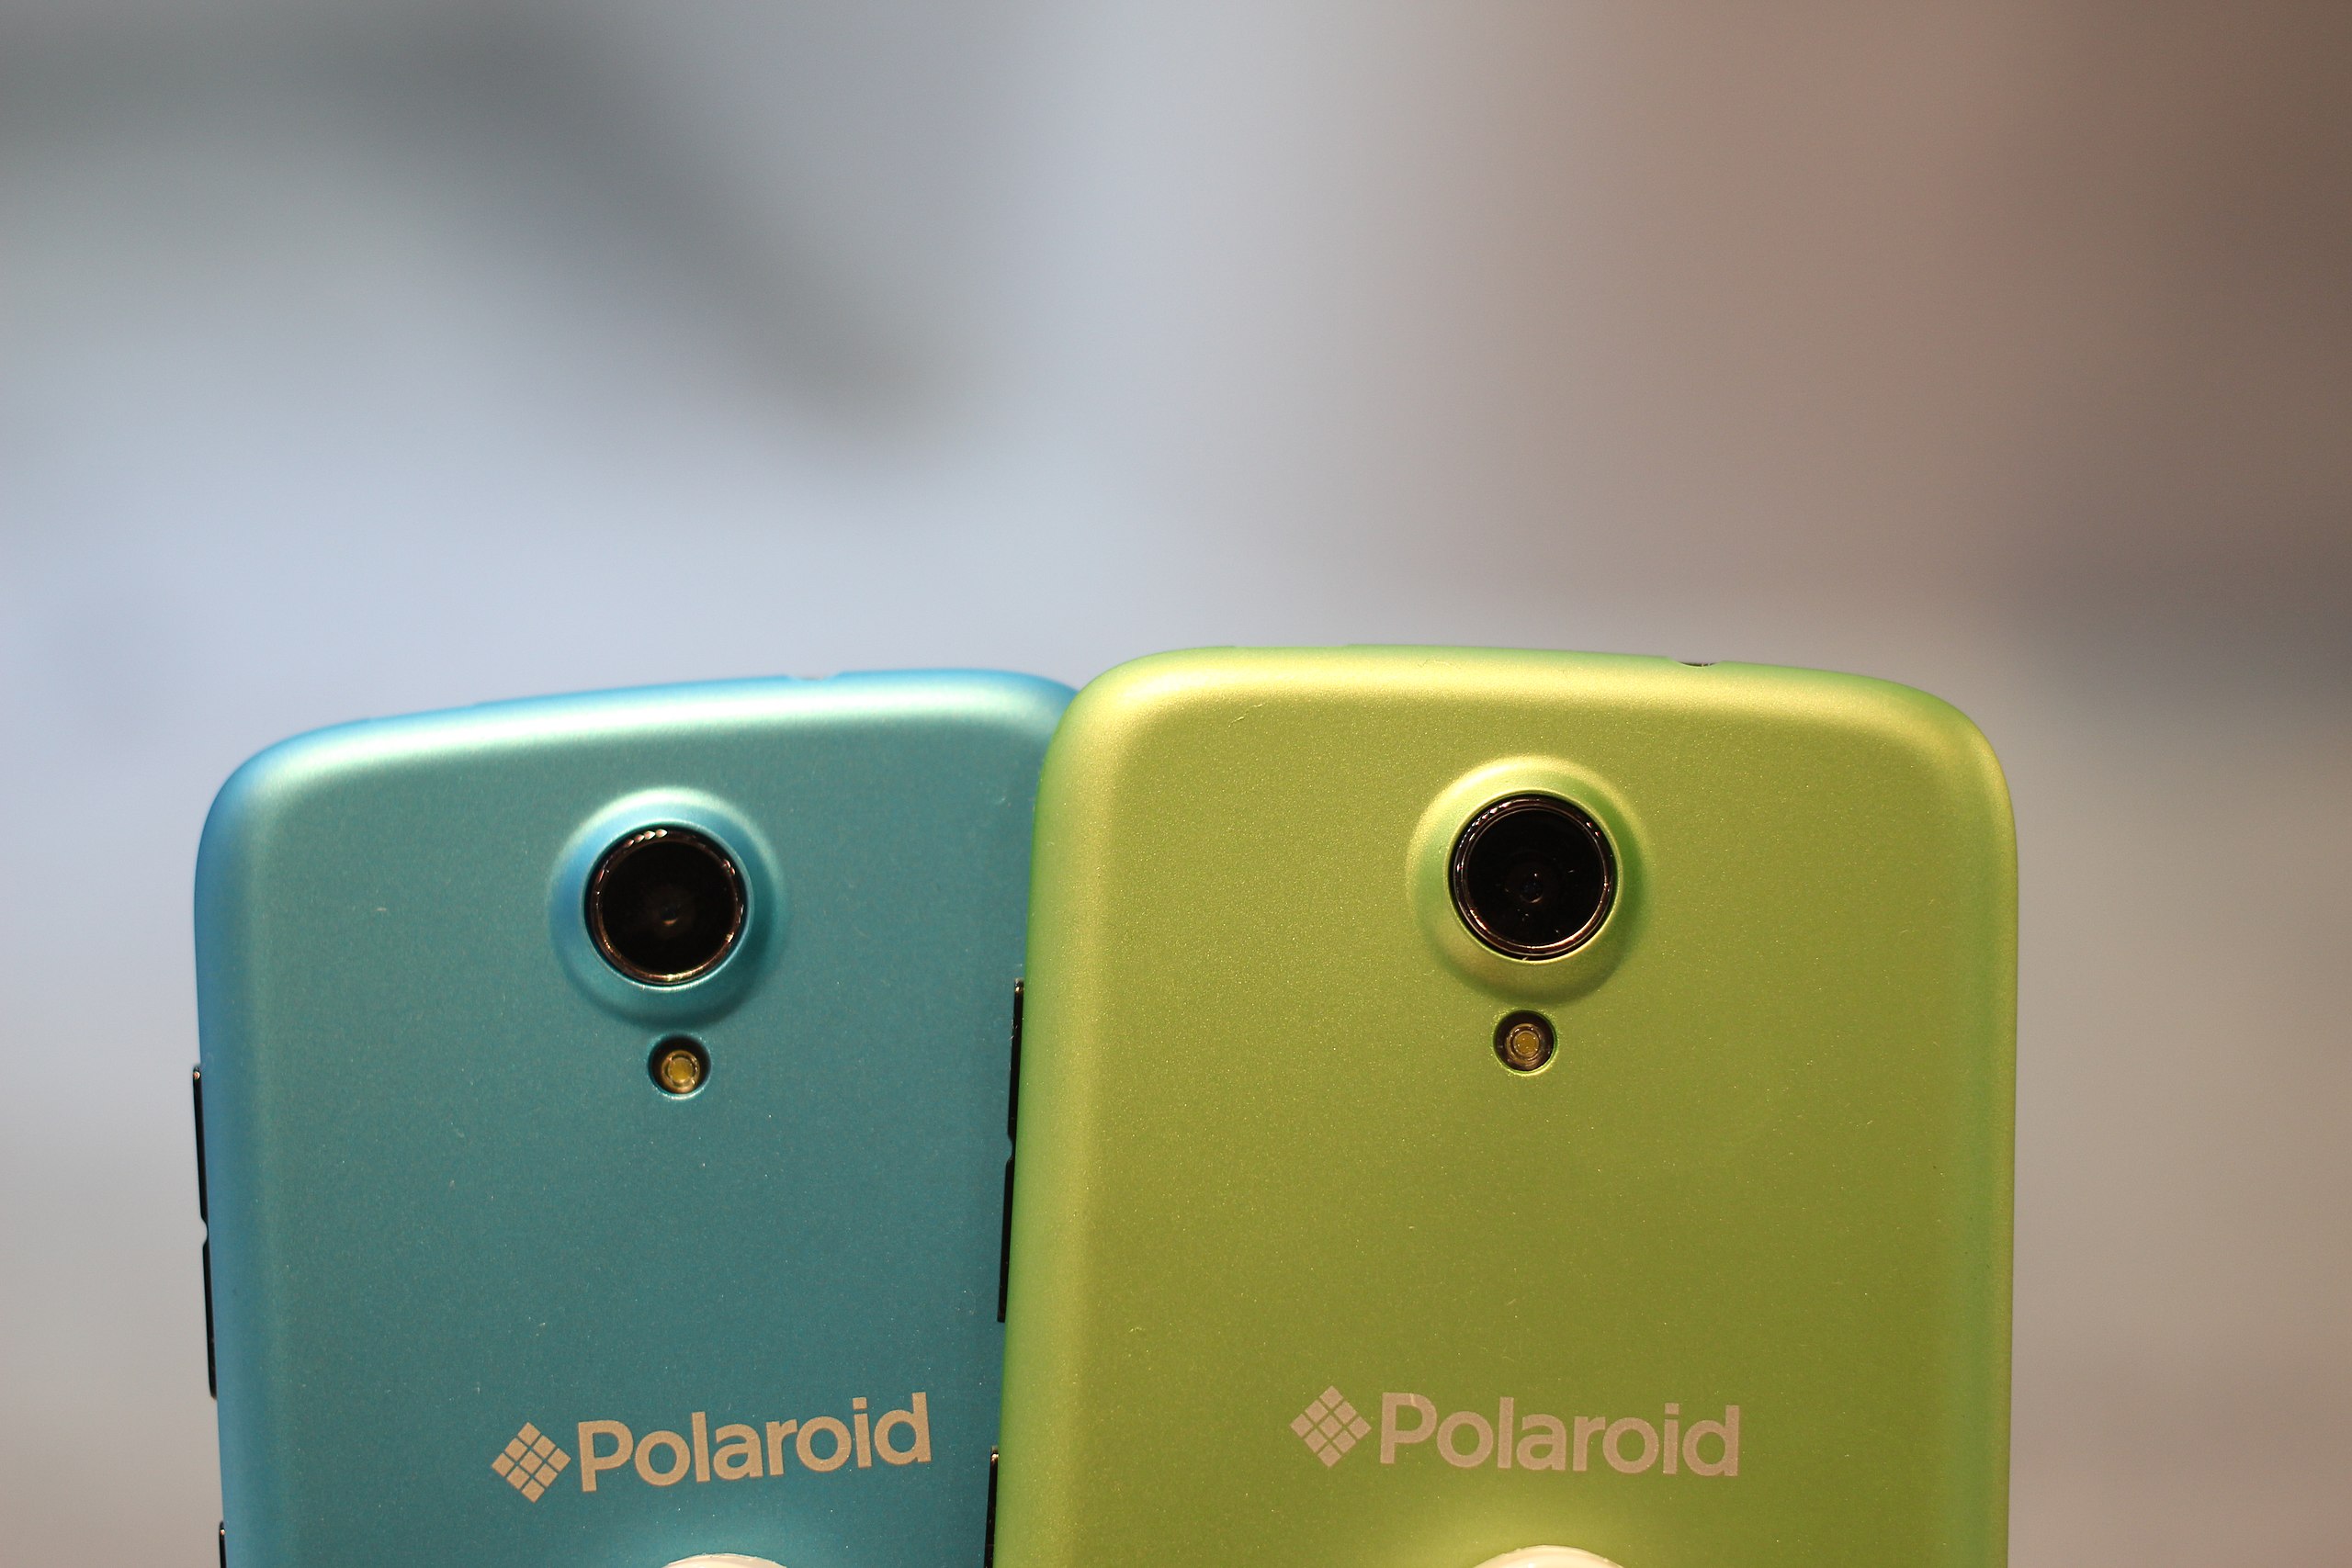 File:Polaroid Snap Android Smartphone (16675935440).jpg - Wikipedia